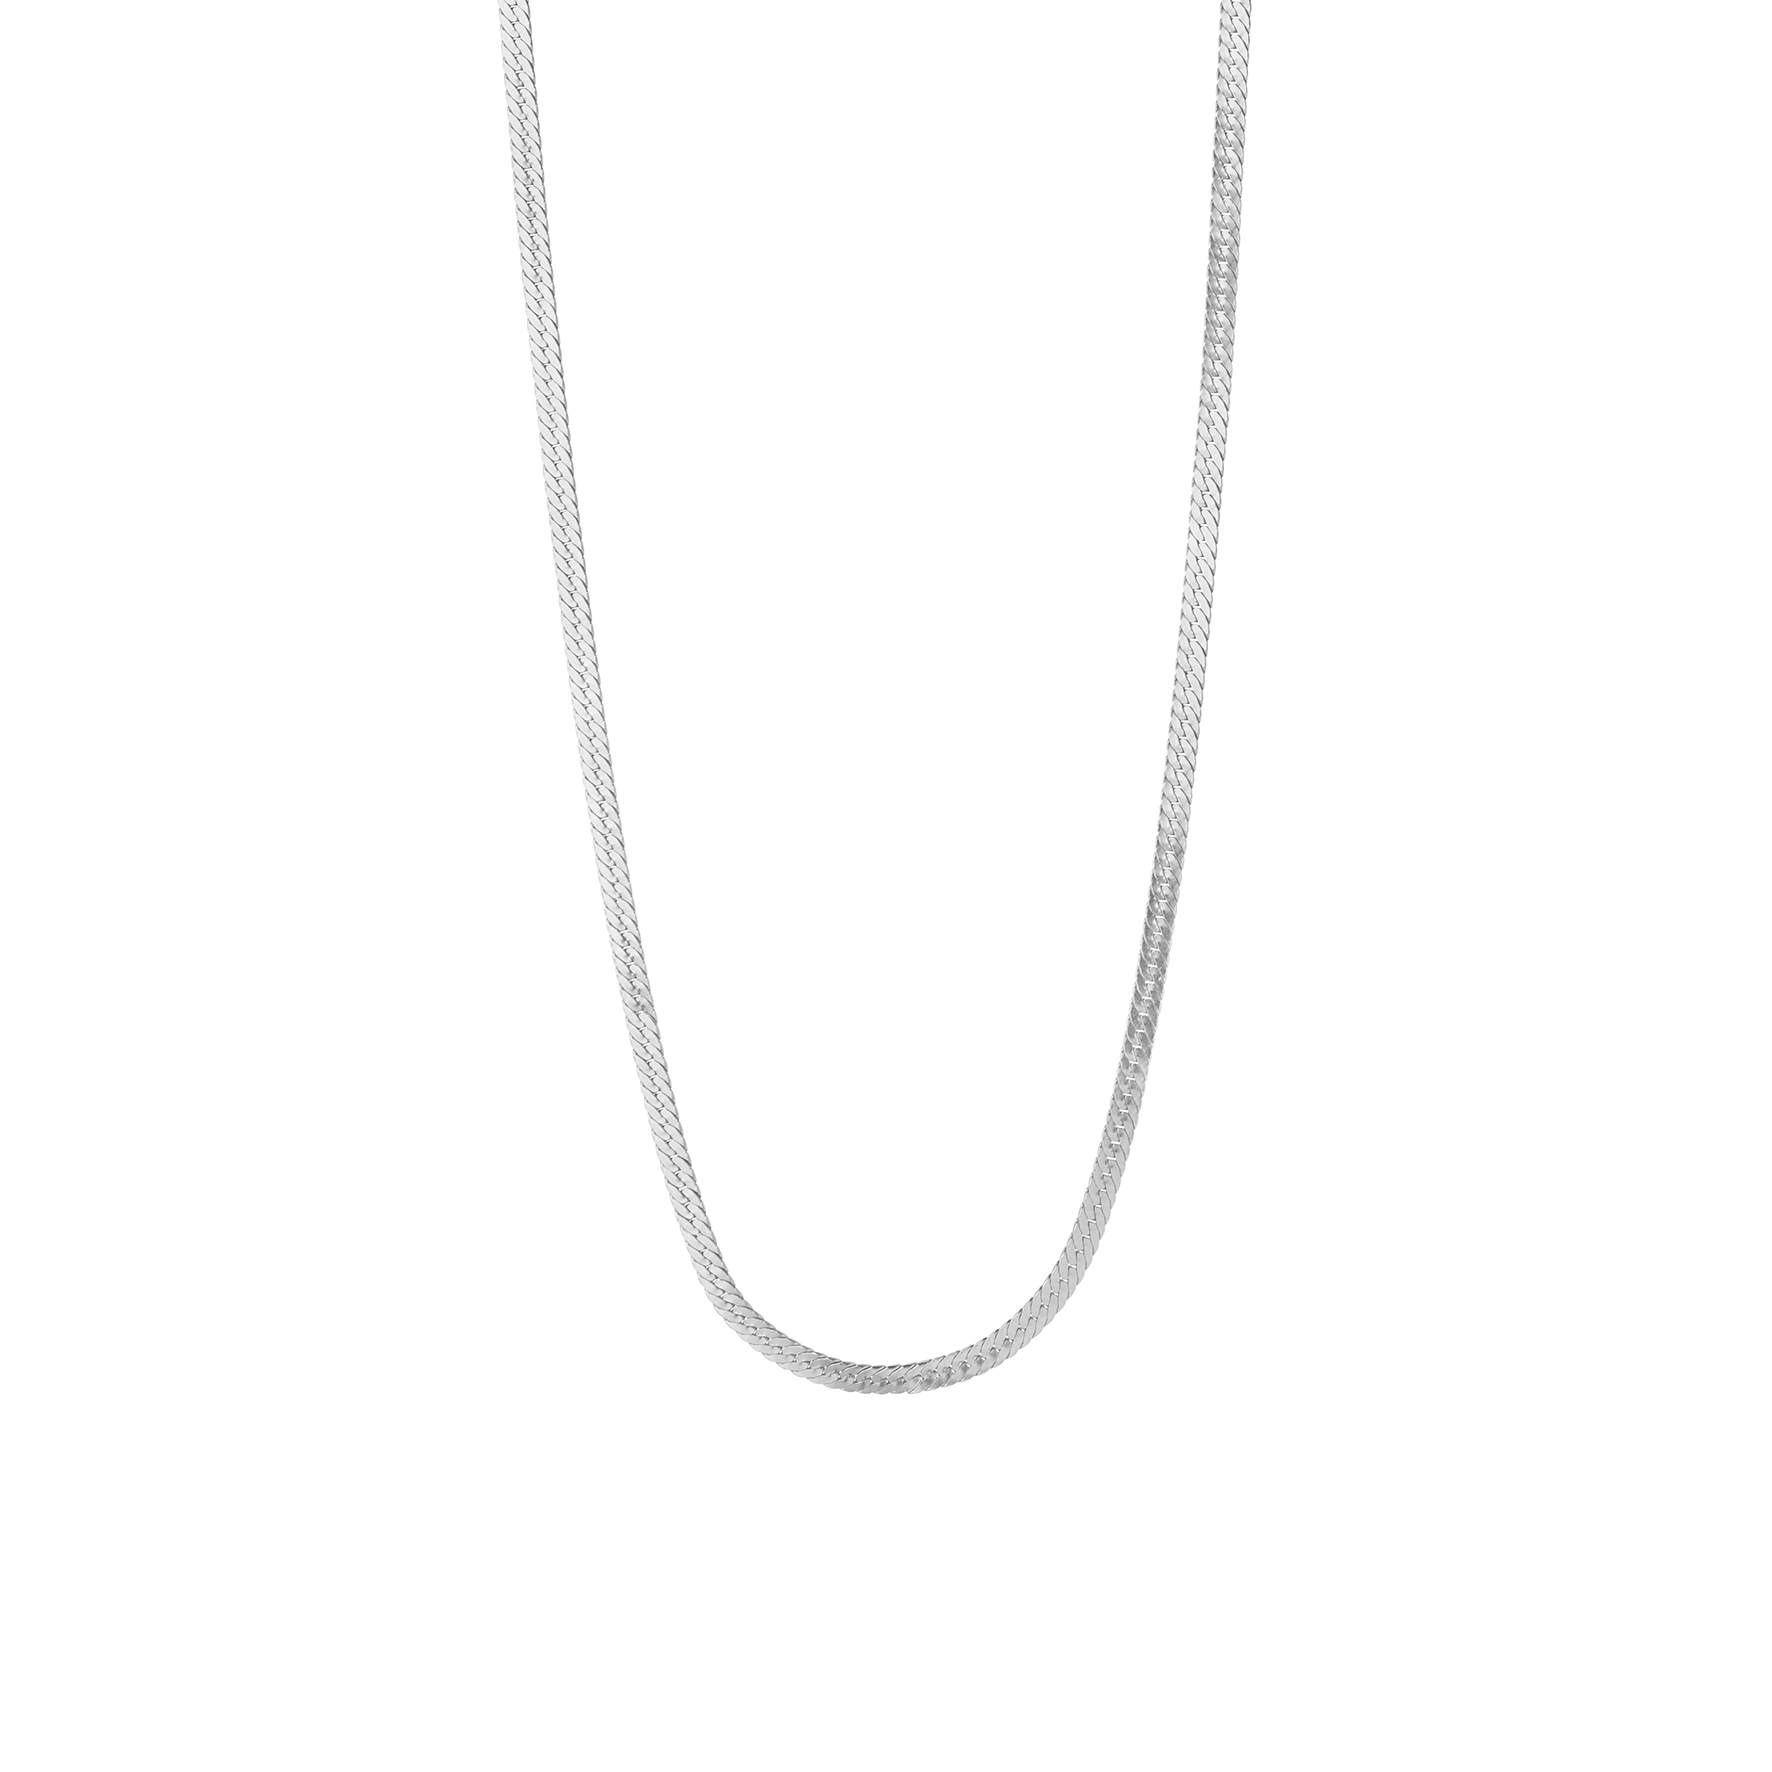 Short Snake Necklace von STINE A Jewelry in Silber Sterling 925